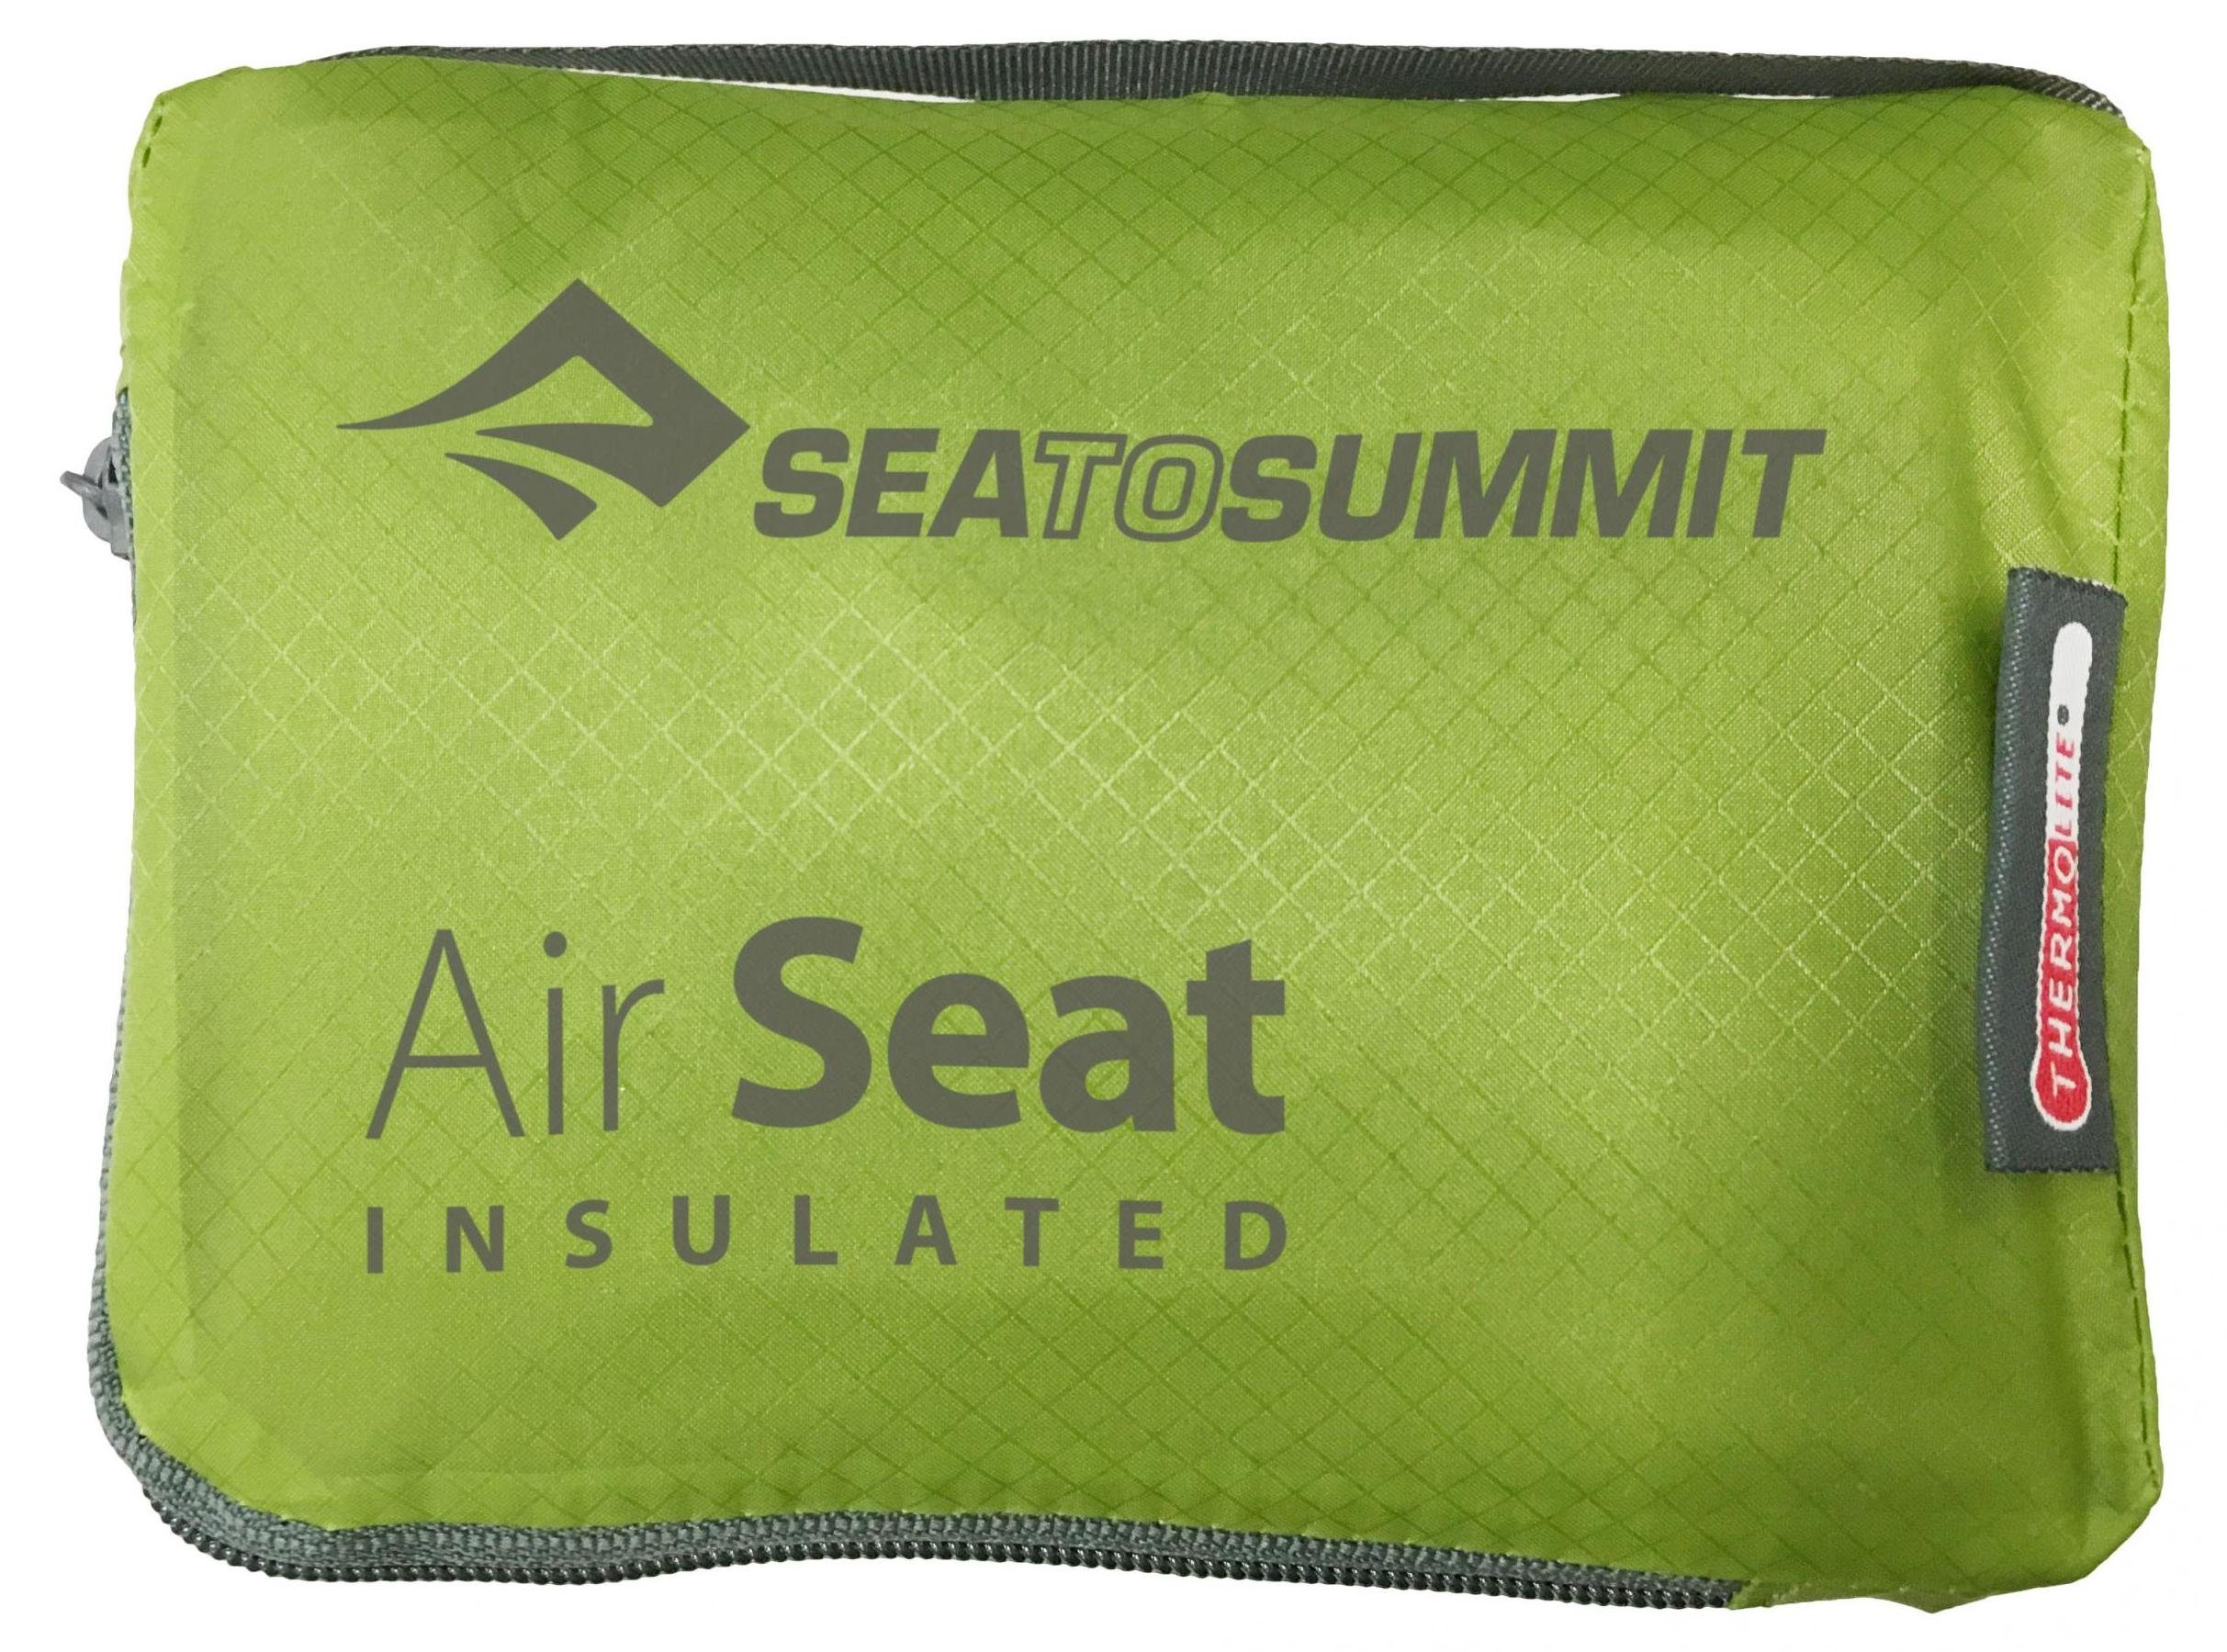 Summit sea Insulated Seat Sea Air to summit to Sitzkissen